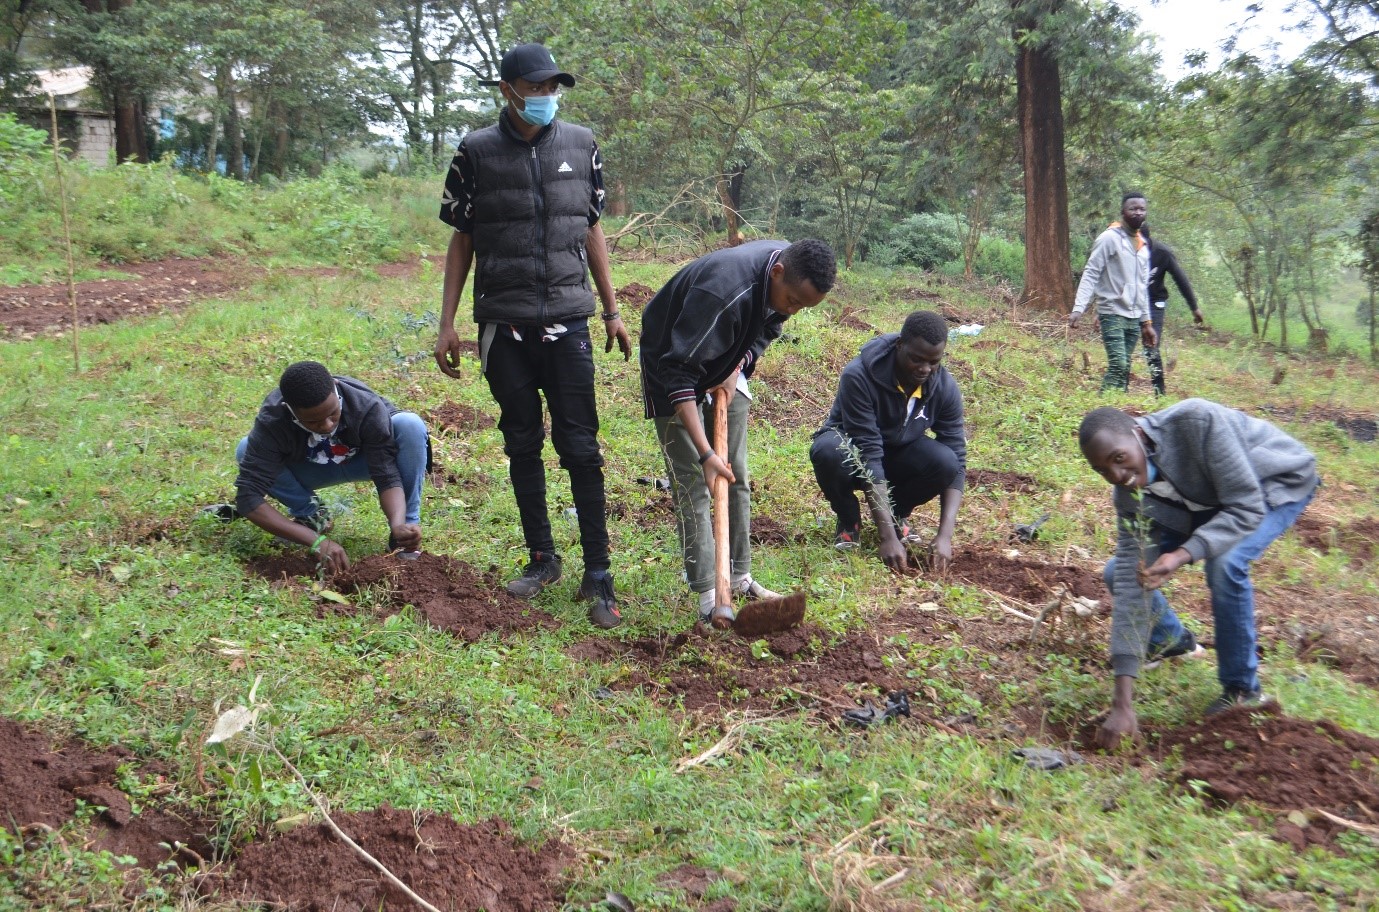 Tree planting exercise at the Kanyariri Vet Farm on 20/11/2020